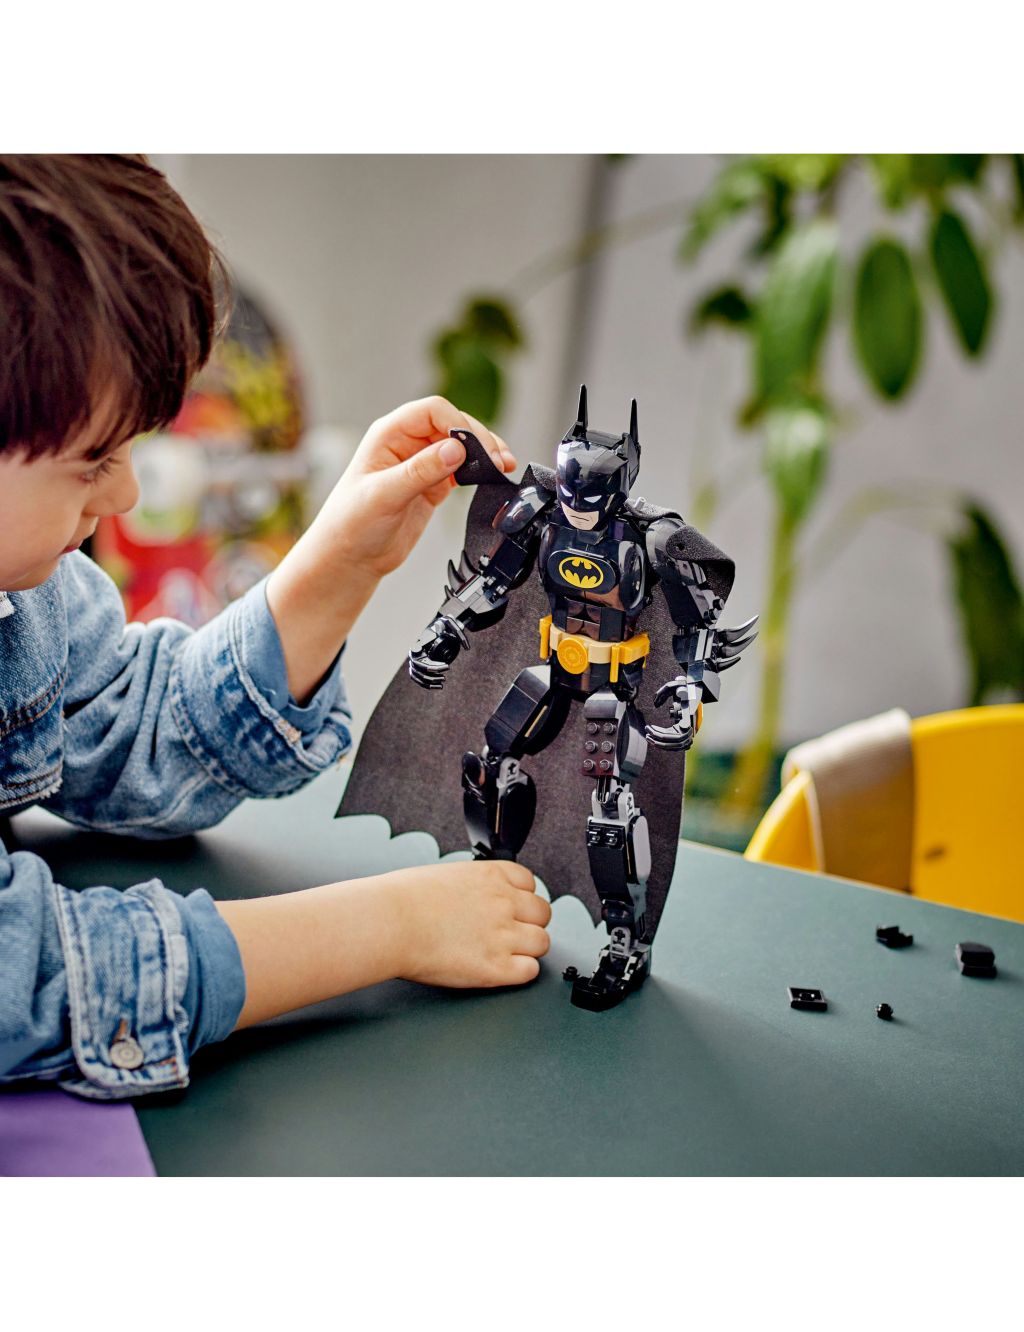 LEGO DC Batman Construction Figure Action Toy (8+ Yrs) image 6